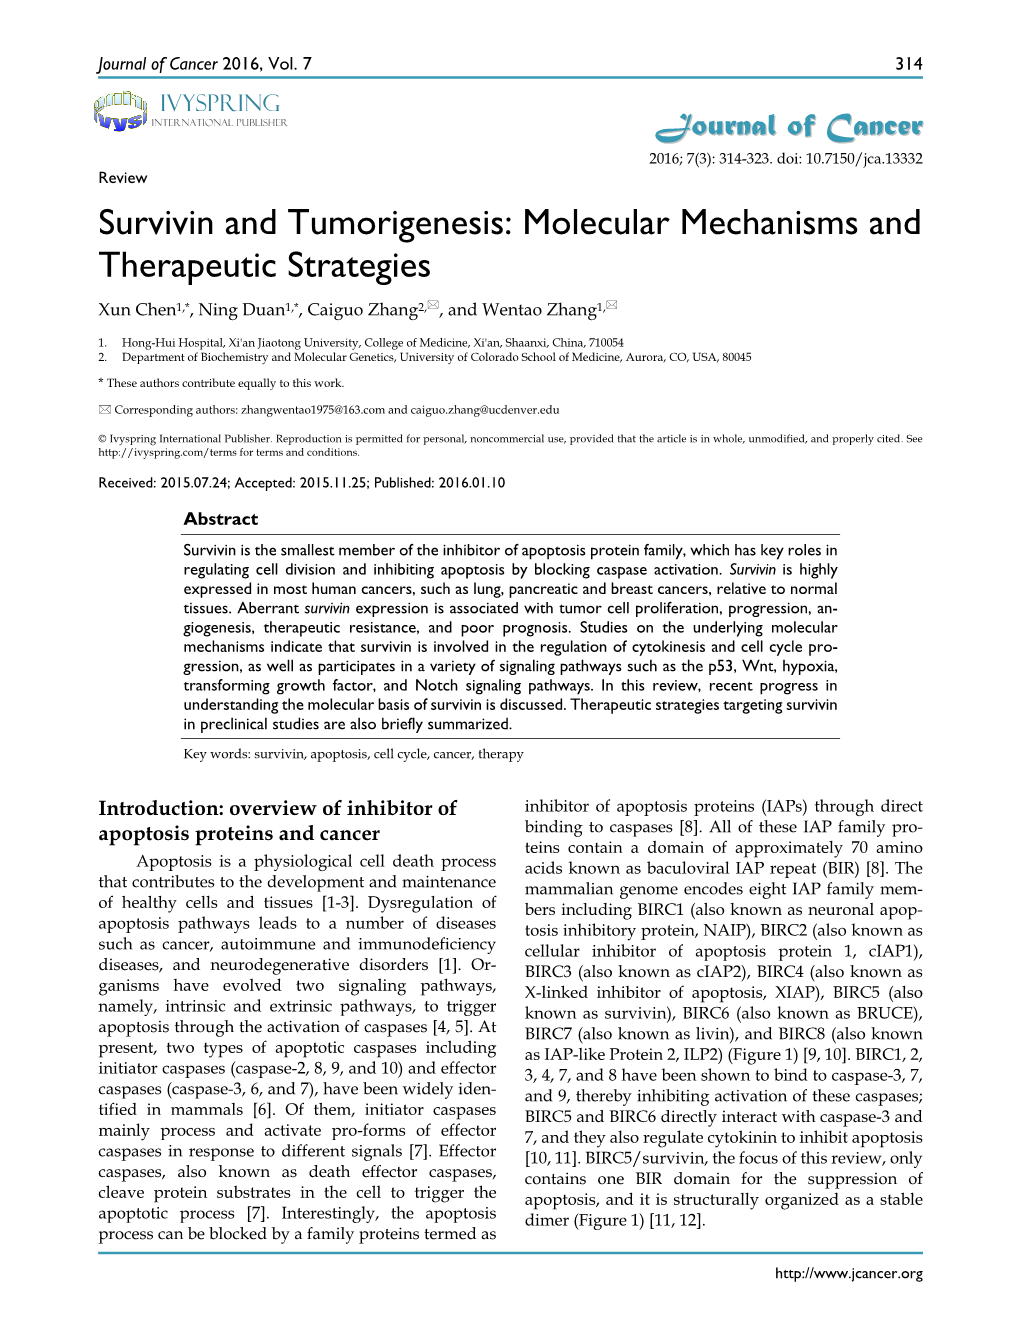 Survivin and Tumorigenesis: Molecular Mechanisms and Therapeutic Strategies Xun Chen1,*, Ning Duan1,*, Caiguo Zhang2,, and Wentao Zhang1,